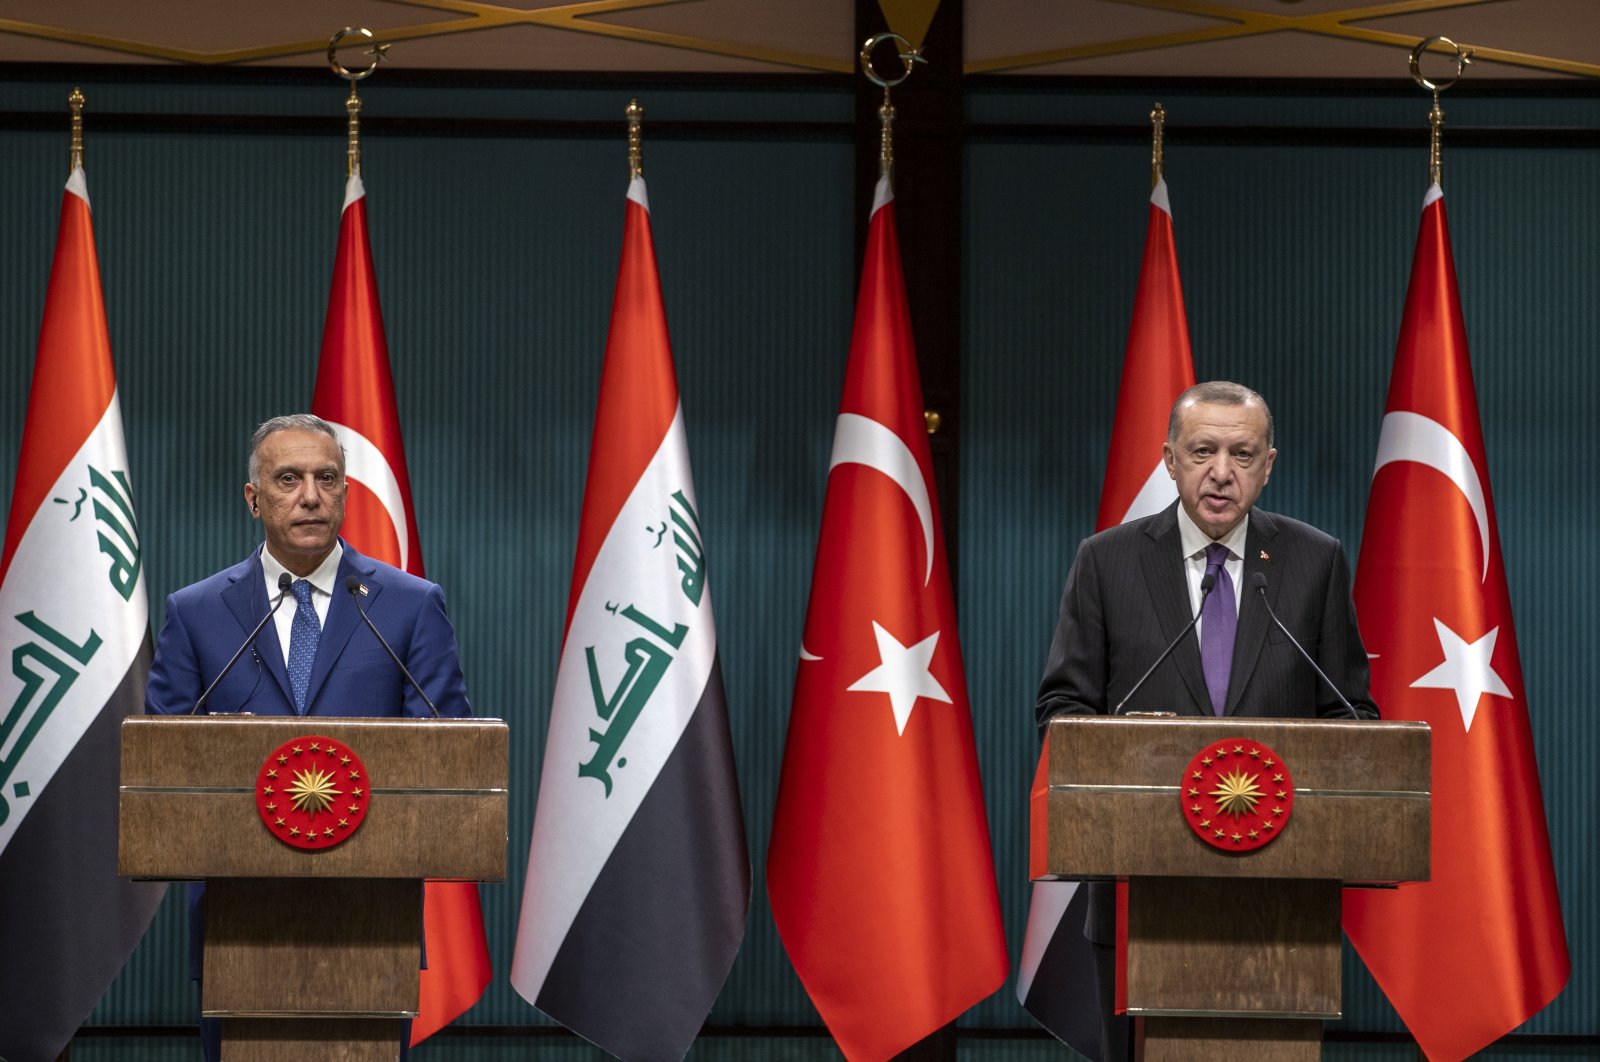 President Recep Tayyip Erdoğan (R) and Iraqi Prime Minister Mustafa al-Kadhimi speak during a joint news conference in the capital Ankara, Turkey, Dec. 17, 2020. (AA Photo)